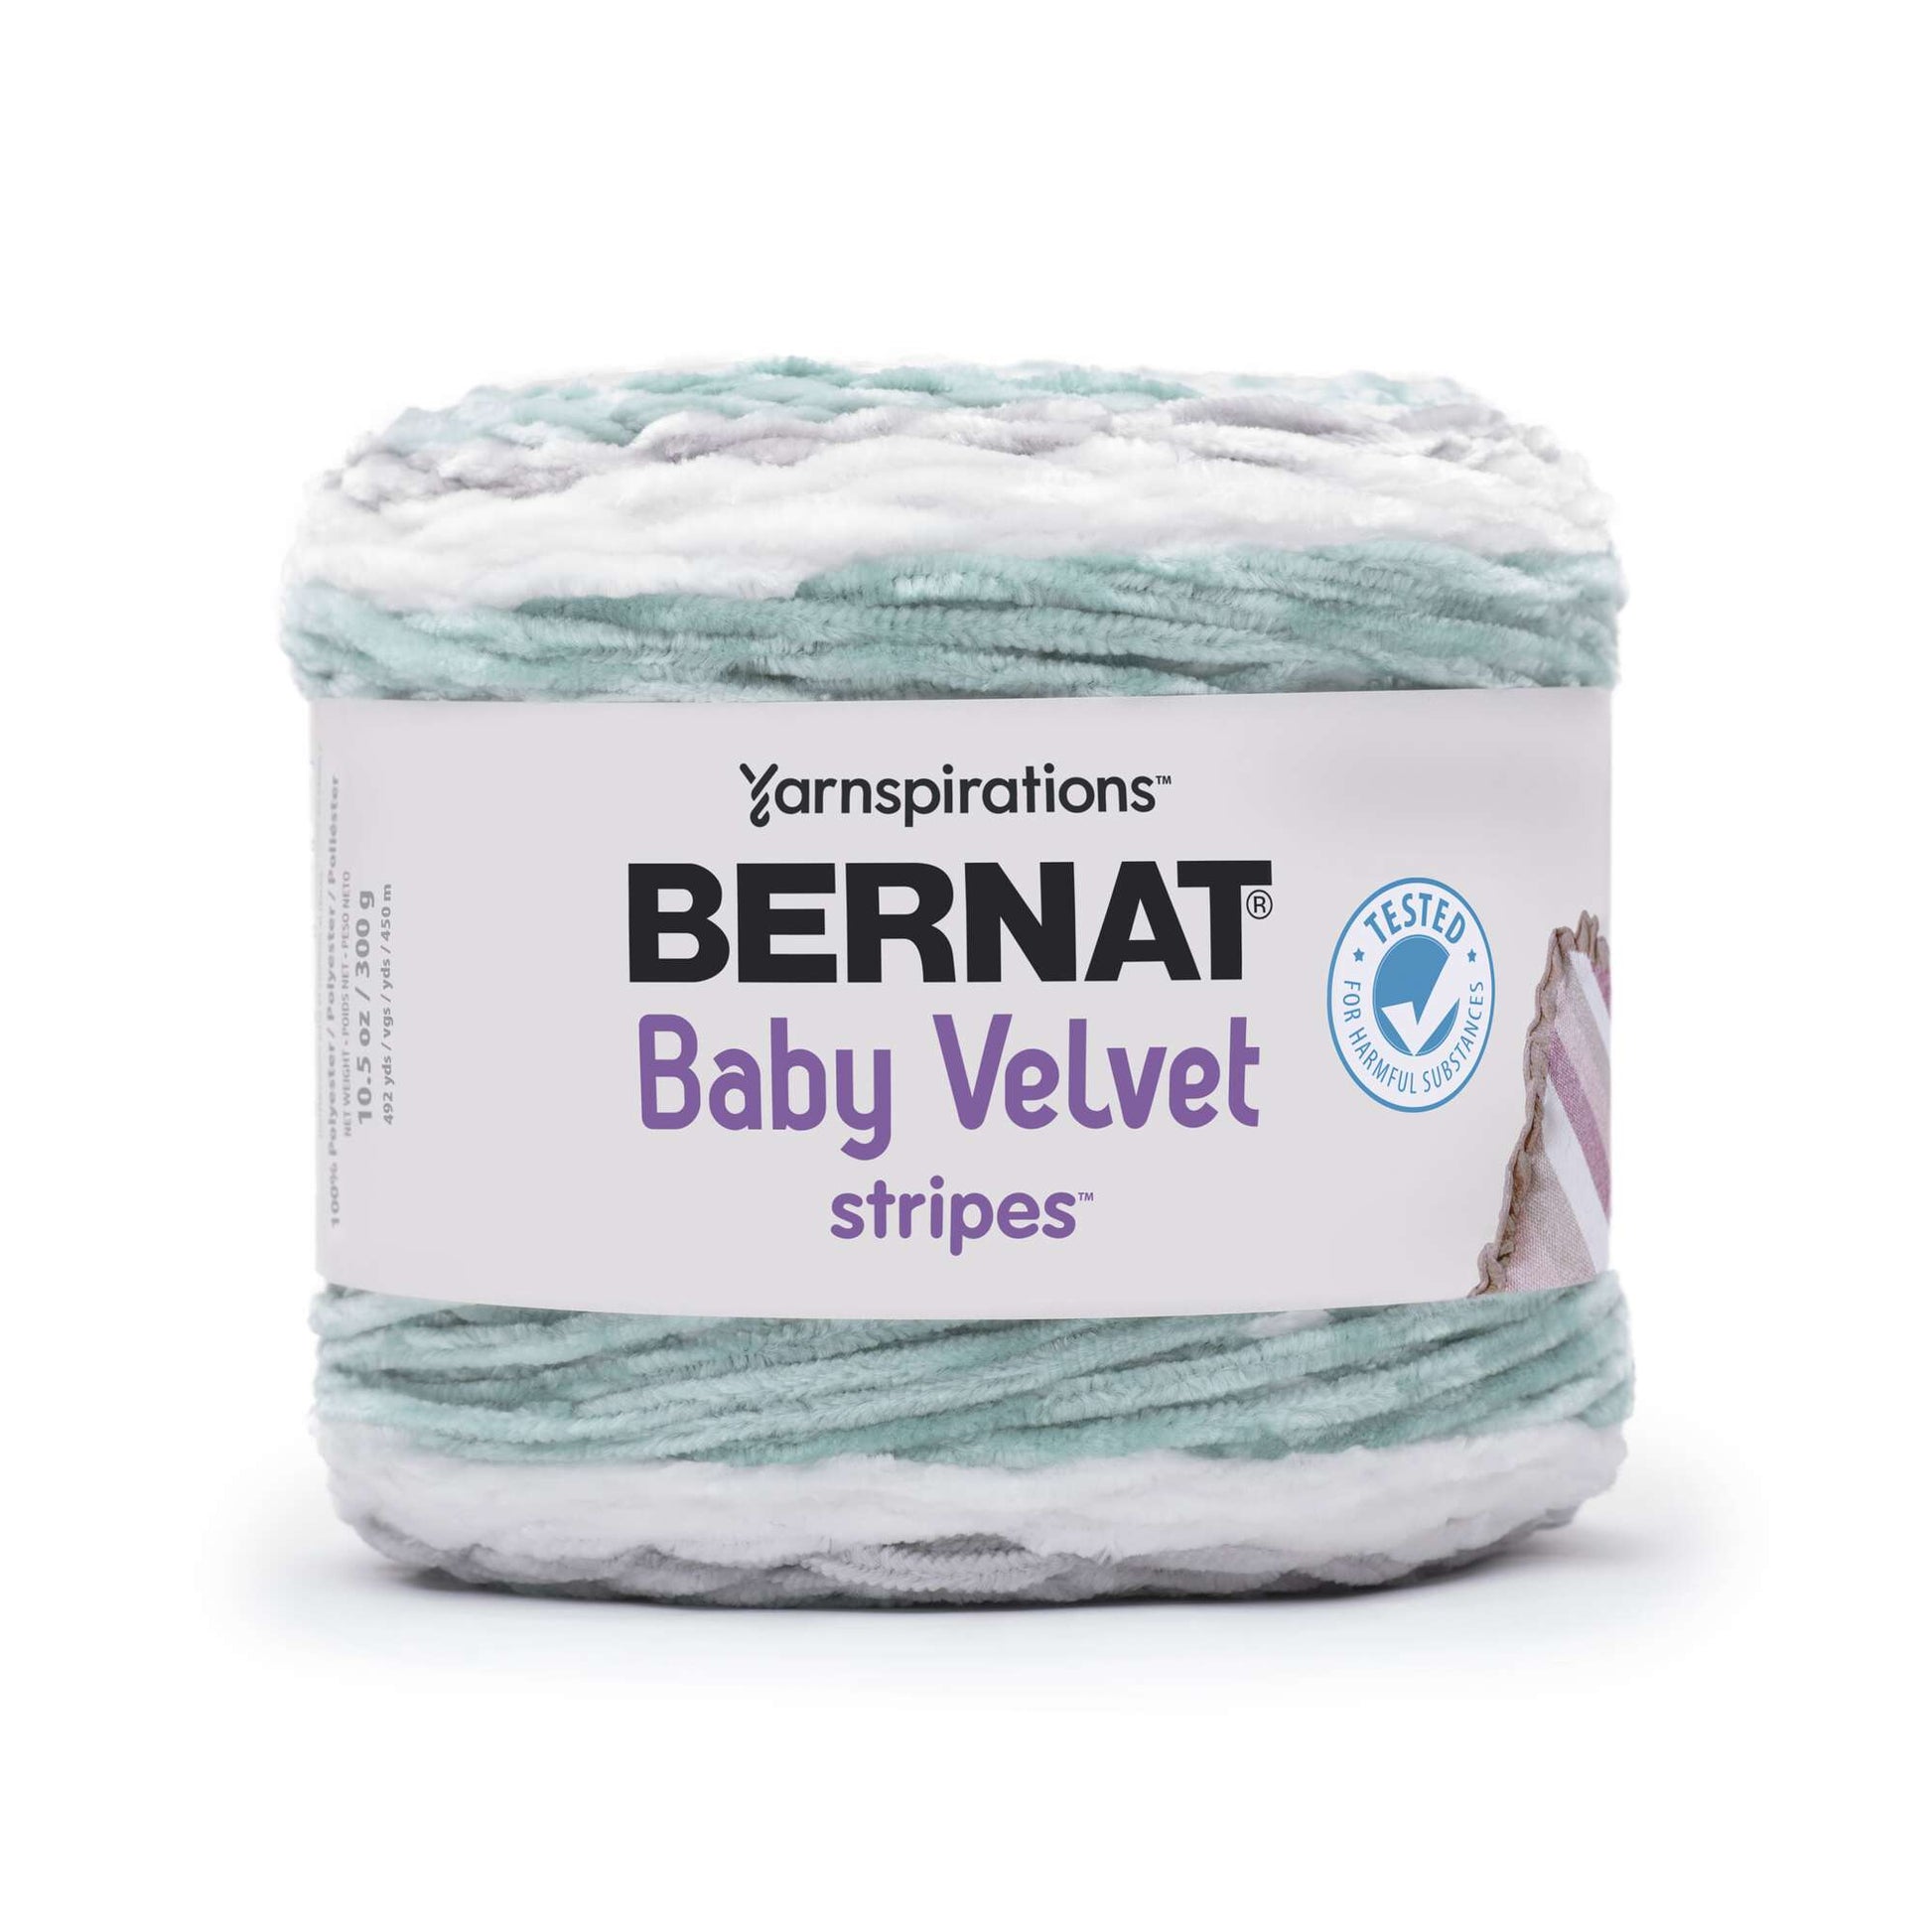 Bernat Baby Velvet Stripes Yarn - Discontinued Shades Misty Forest